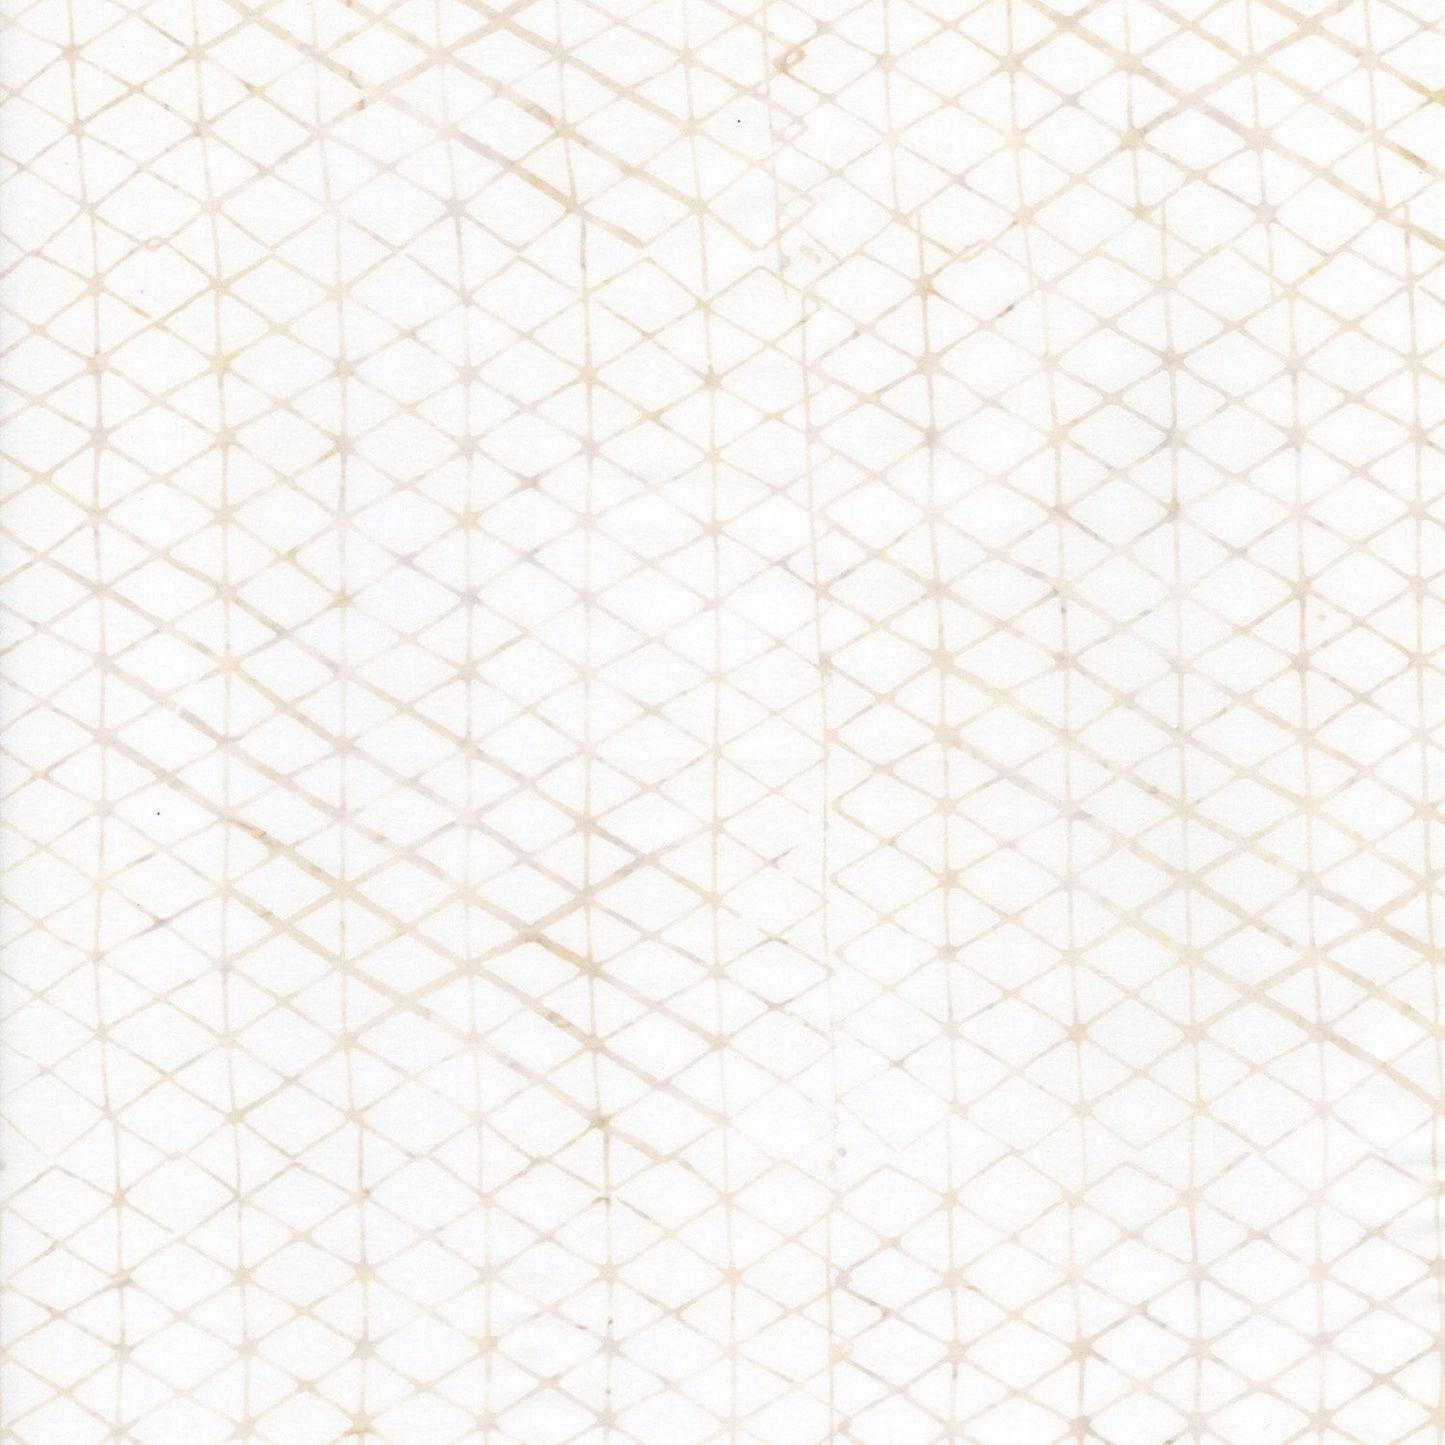 Alabaster 5" Squares, Timeless Treasures Treat-Mini42 Alabaster, Neutral Background Batik Charm Pack Fabric, 5" Inch Precut Fabric Squares